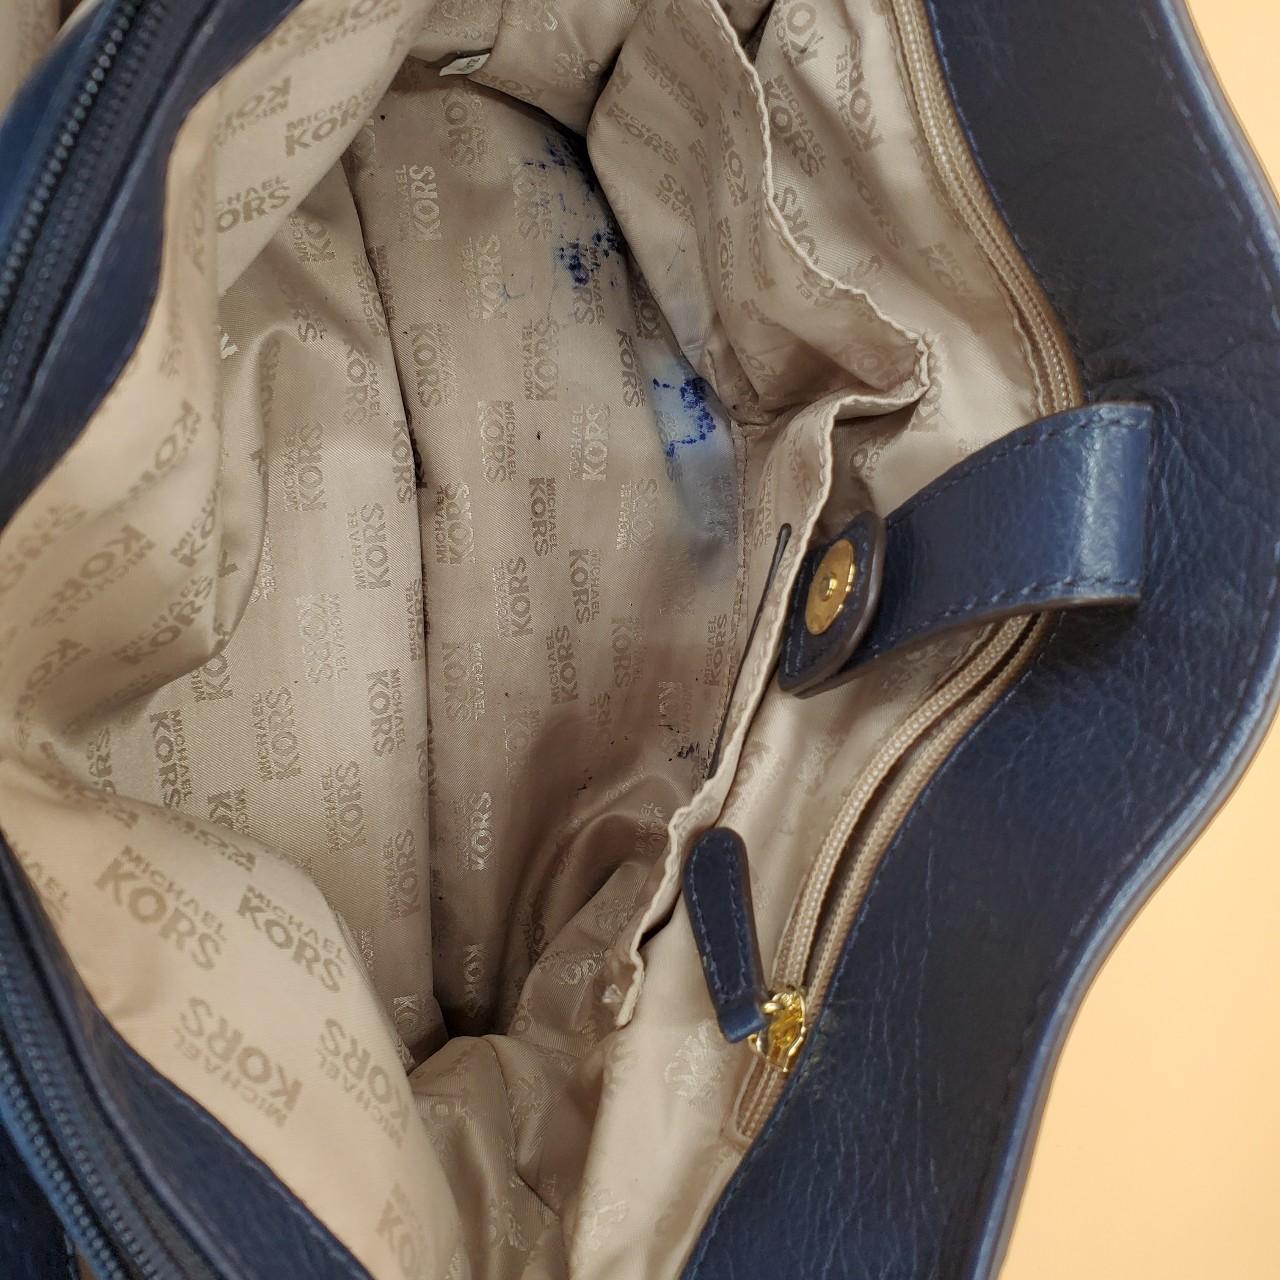 Beautiful leather Michael Kors Hamilton Bag. New - Depop